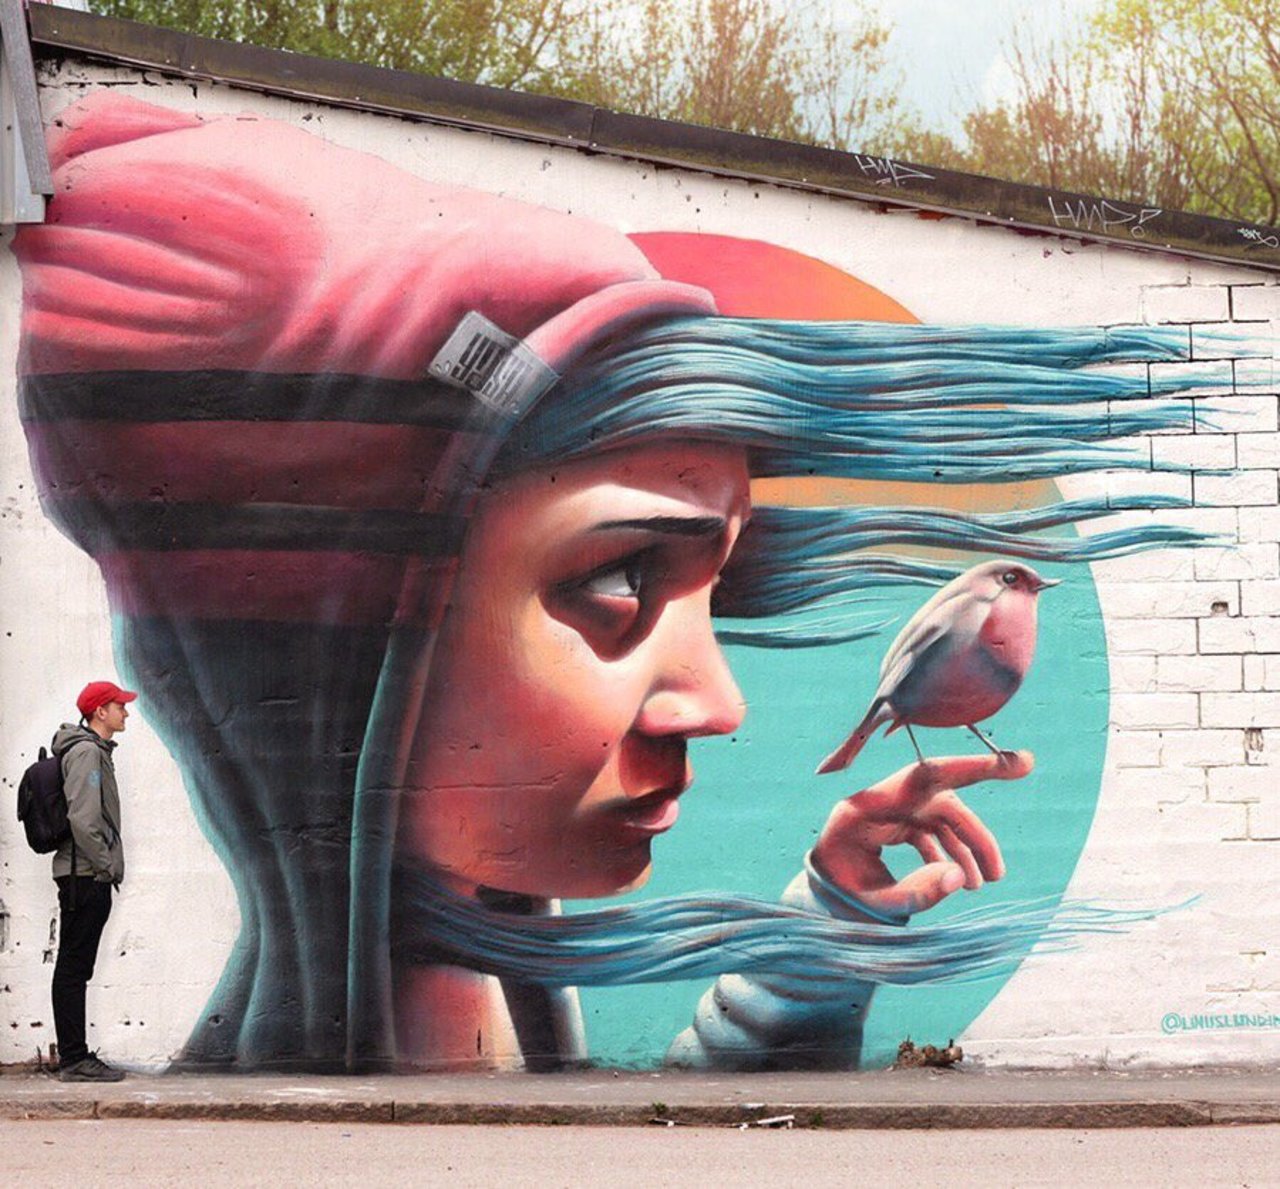 Mural by Yash #stockholm #Sweden #art #graffiti #mural #streetart #urbanart https://t.co/mP0yhoq4rE